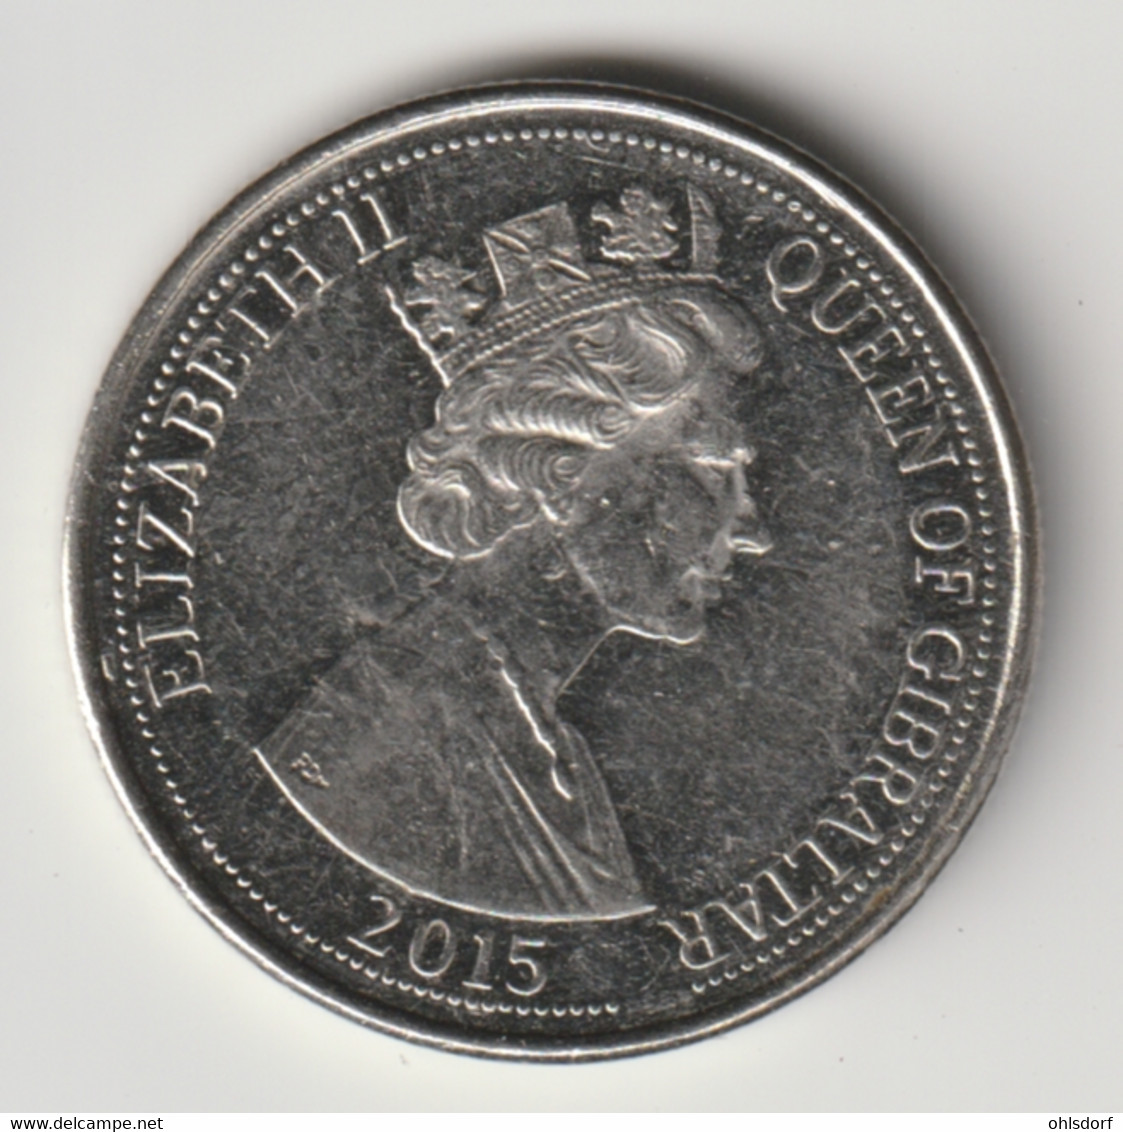 GIBRALTAR 2015: 10 Pence - Gibraltar